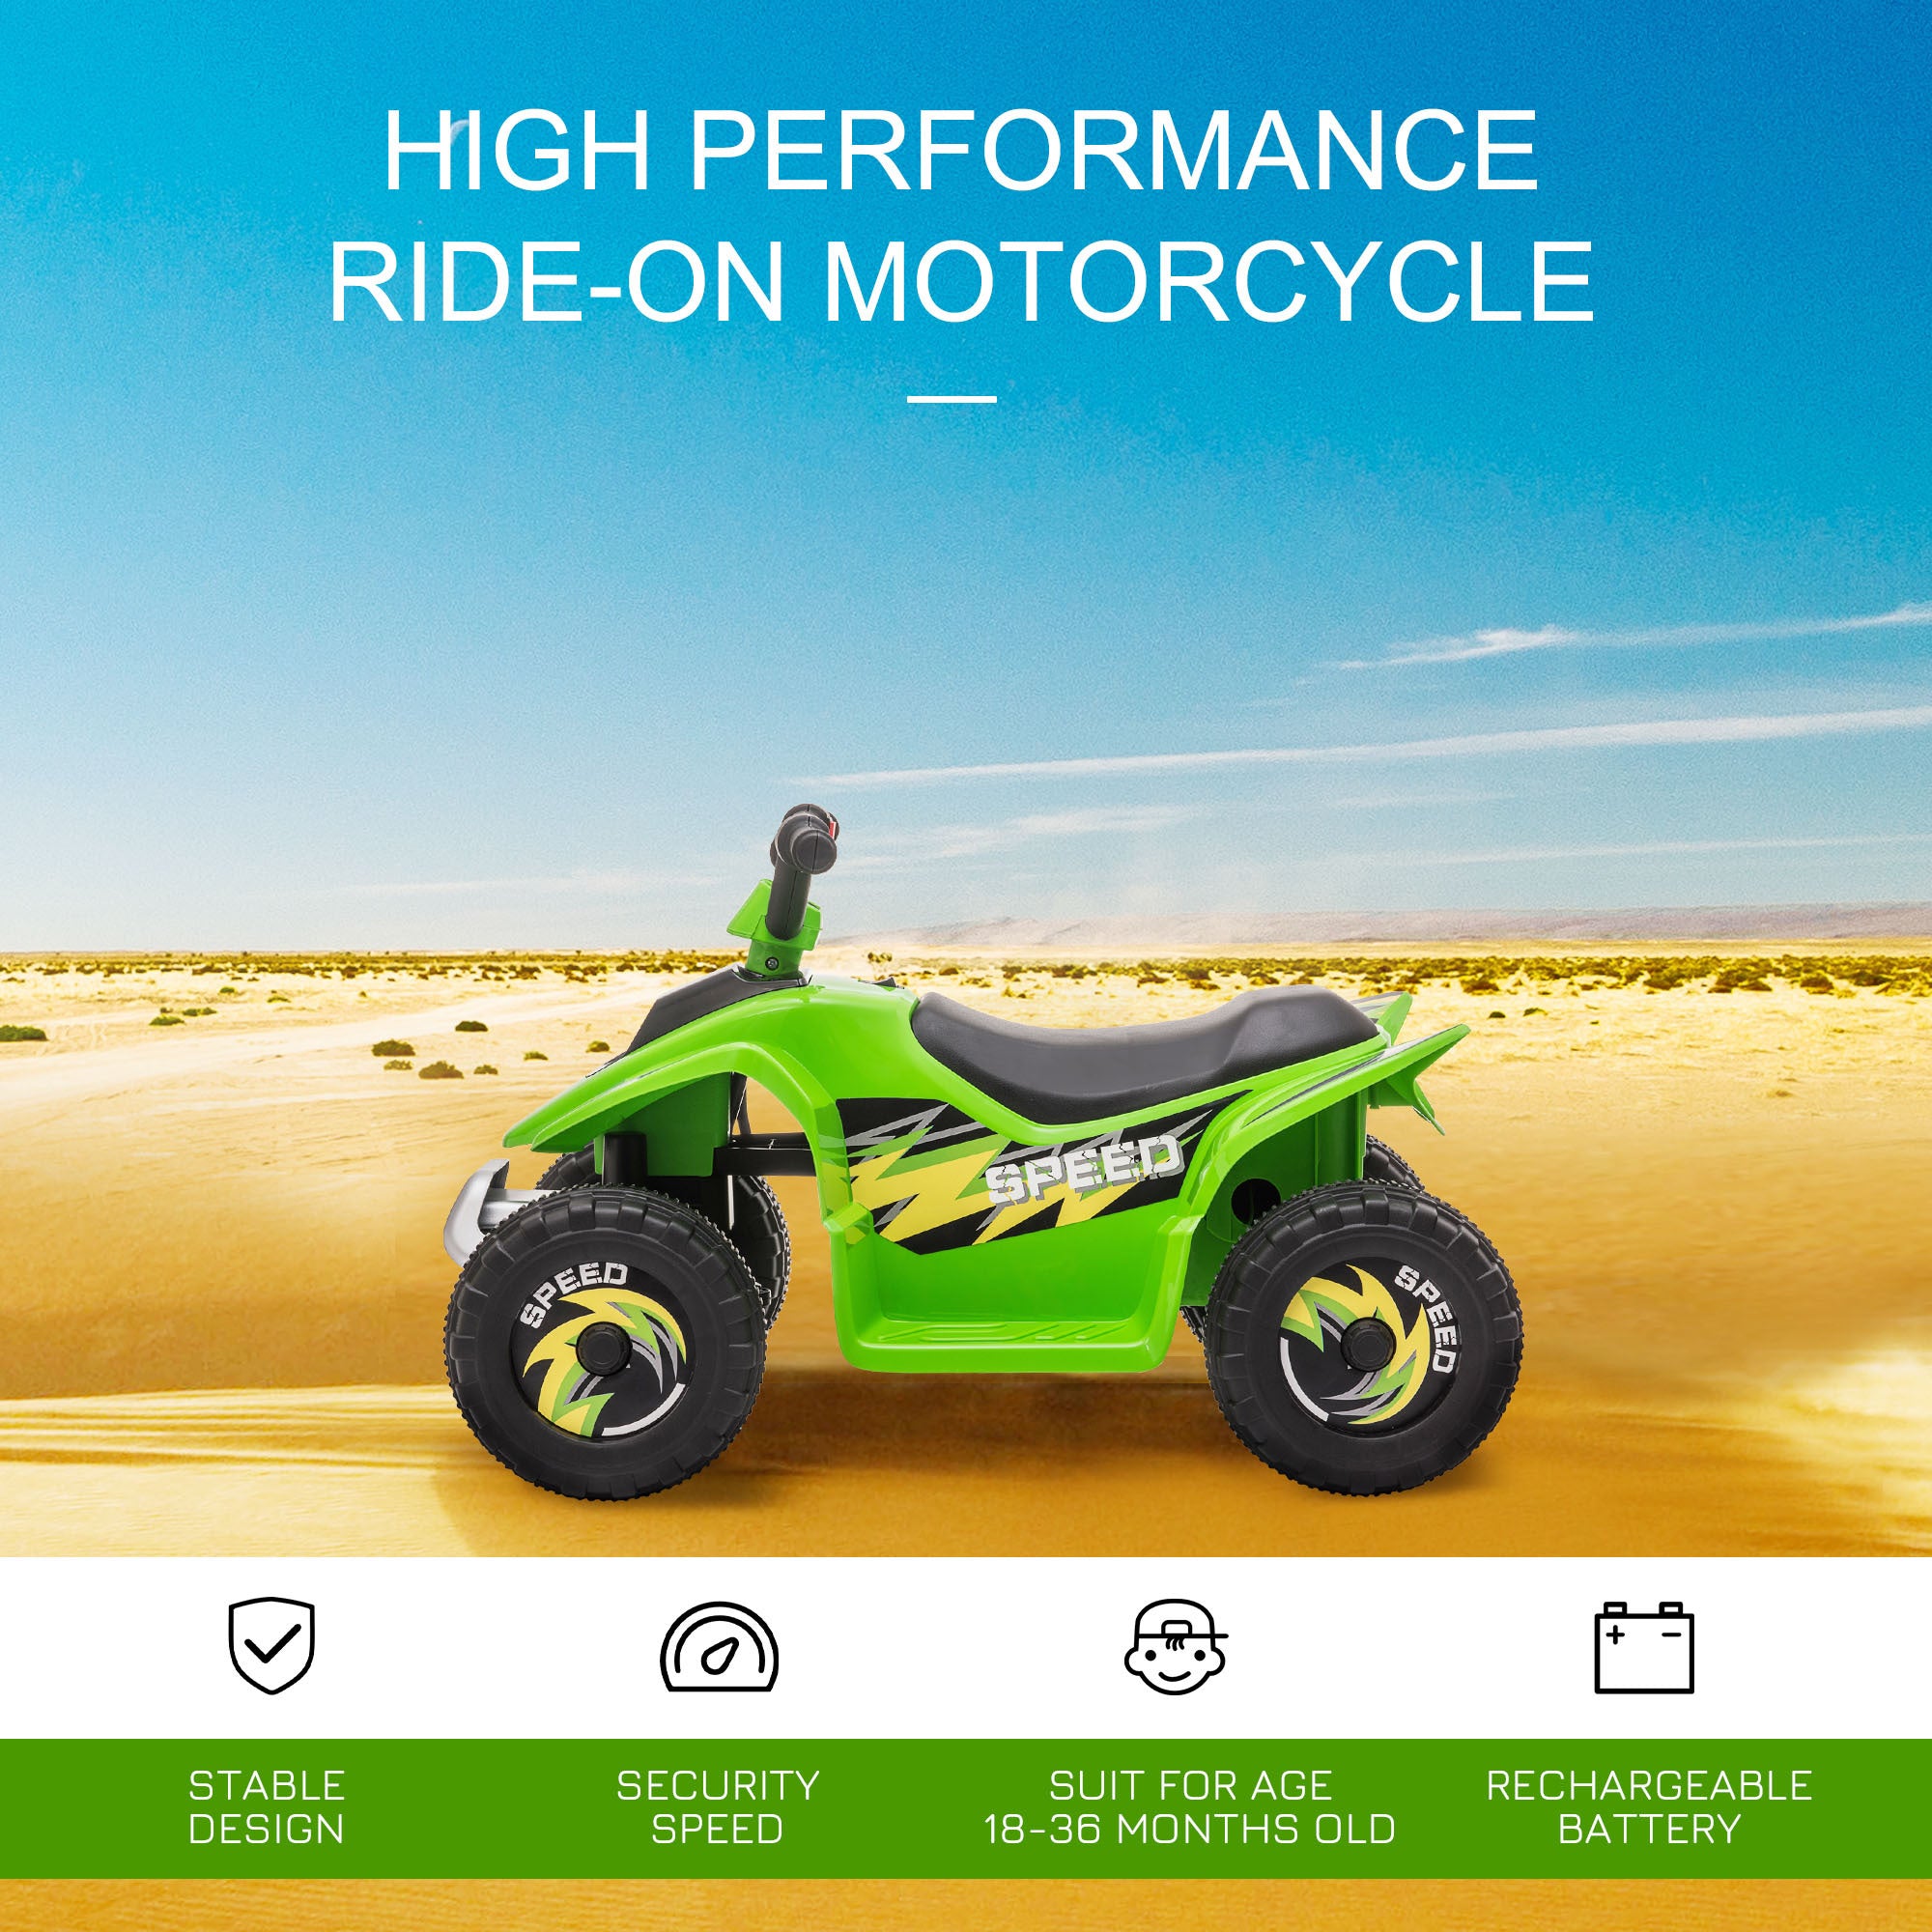 6V Kids ATV 4 Wheeler Ride on Car, Electric Motorized green-steel